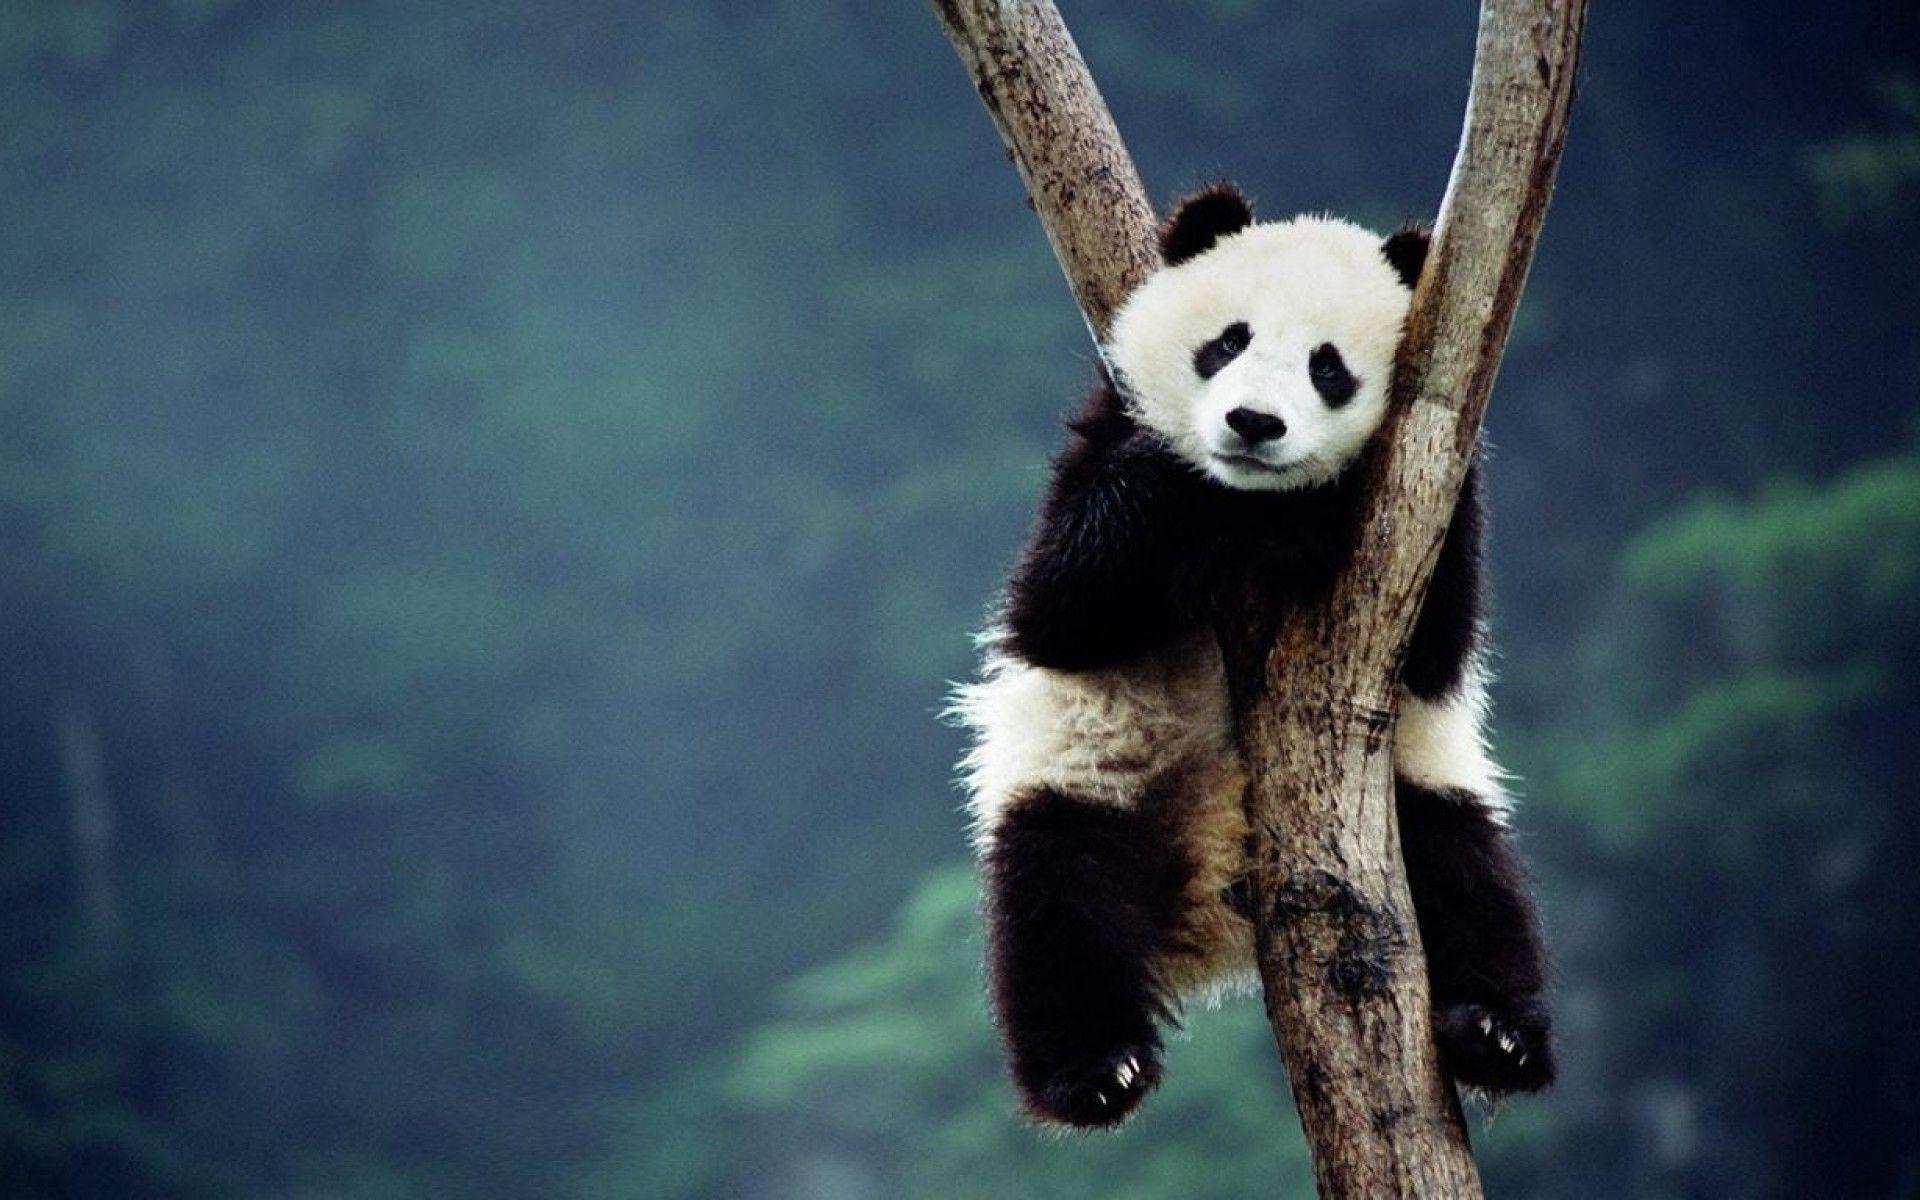 Nature Wallpaper Of A Panda Bear That Has Climbed Onto A Tree